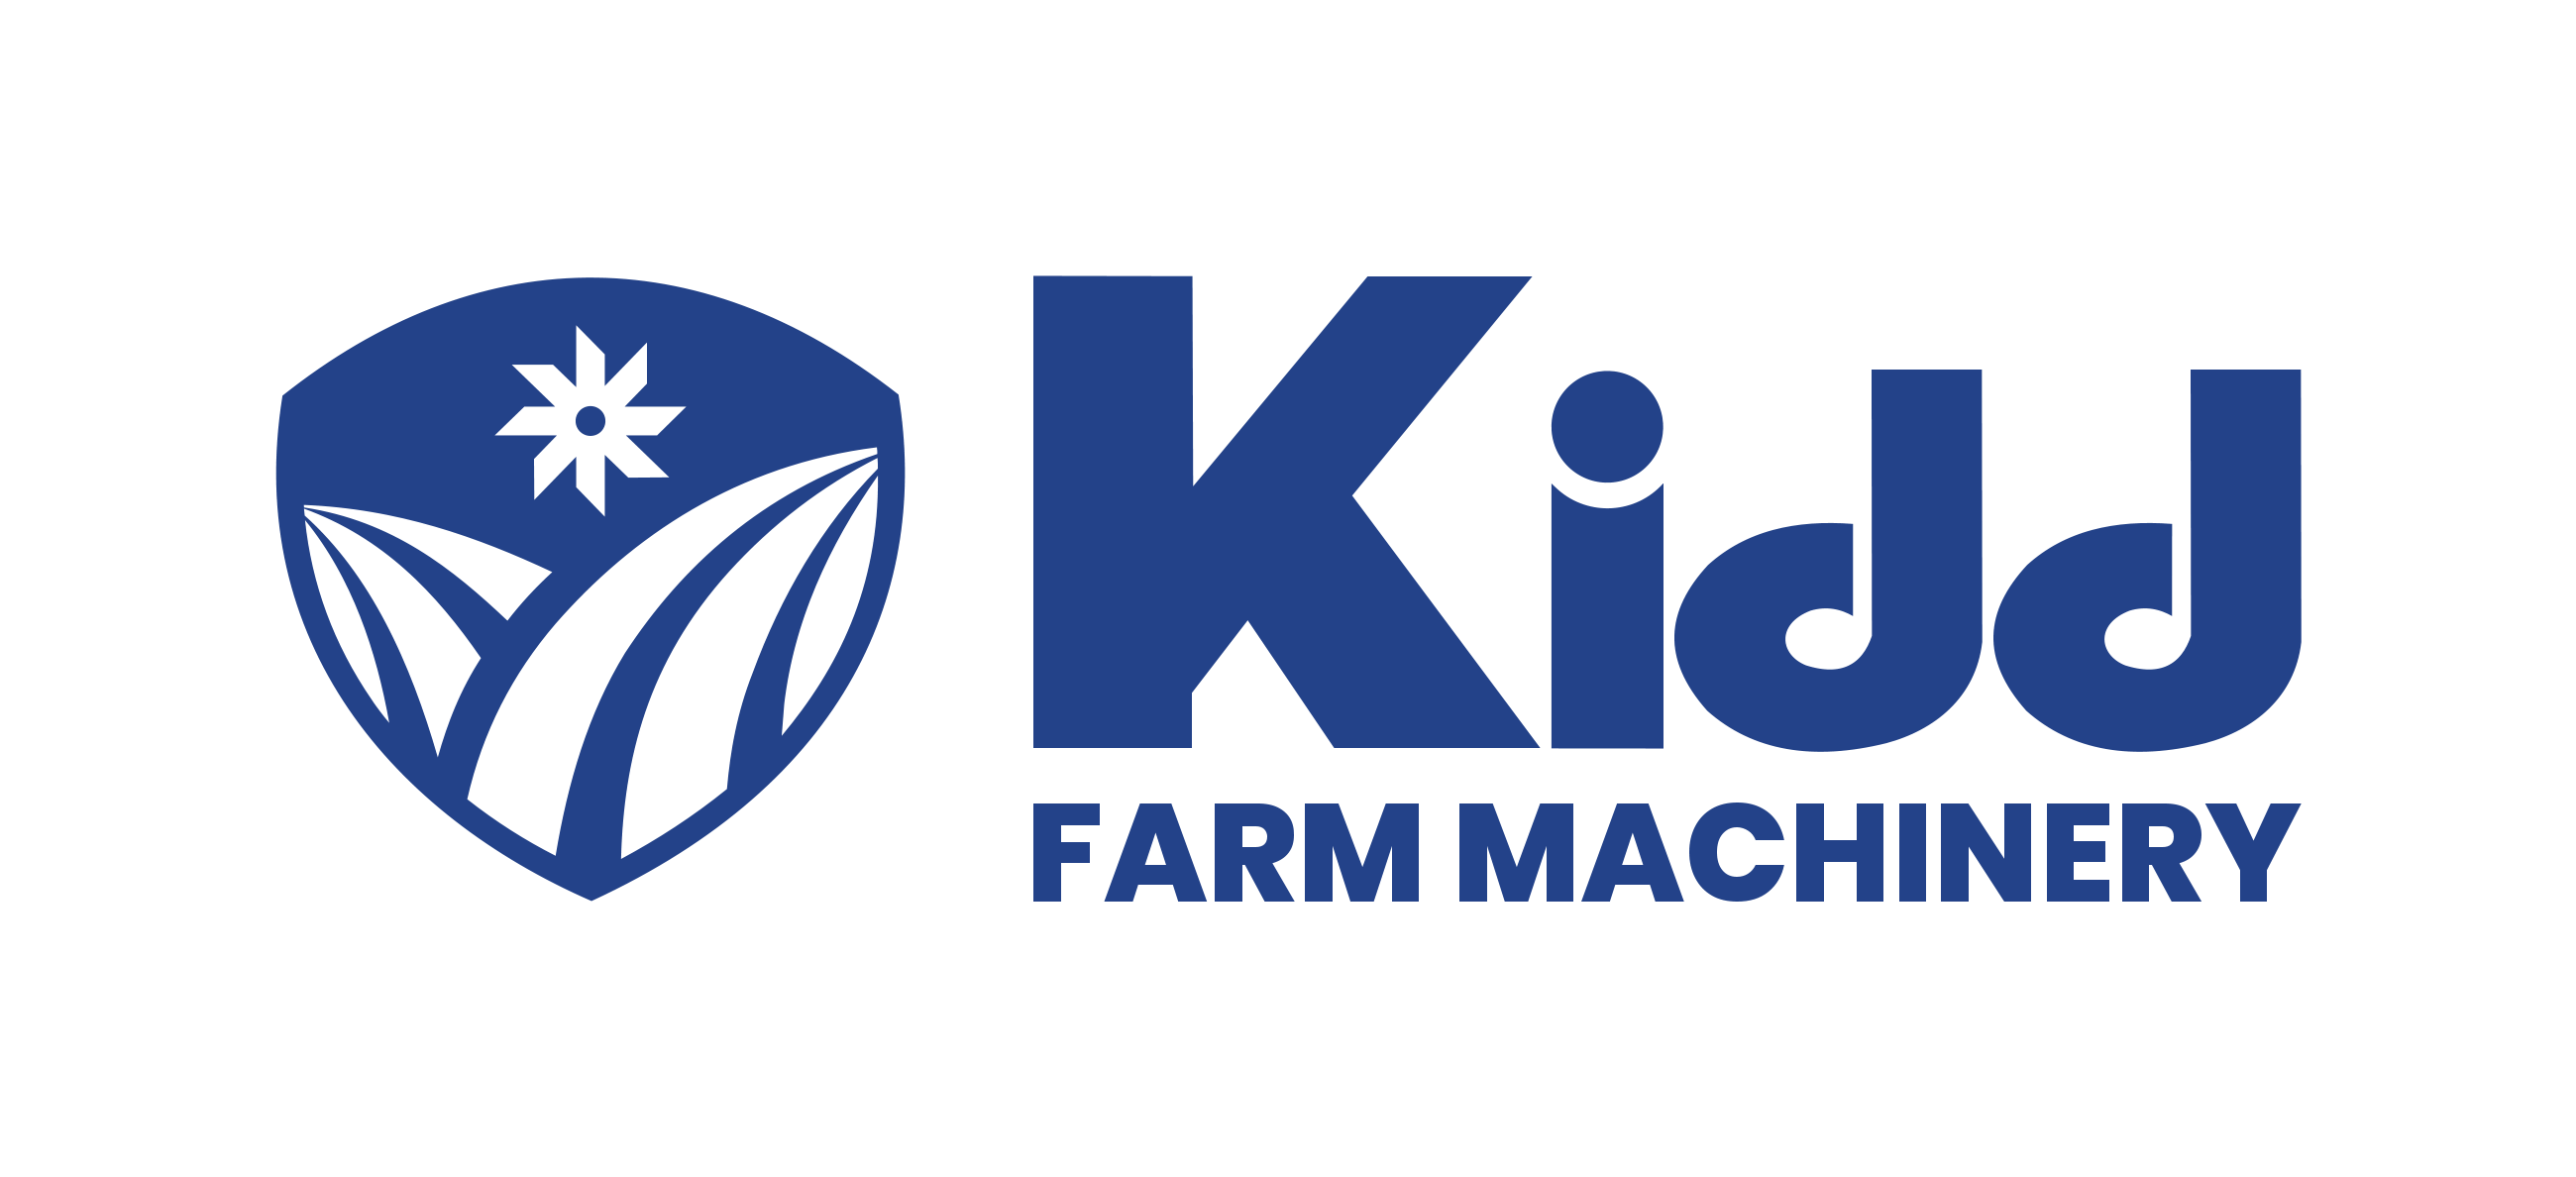 Kidd Farm Machinery - Quality Farm Machinery